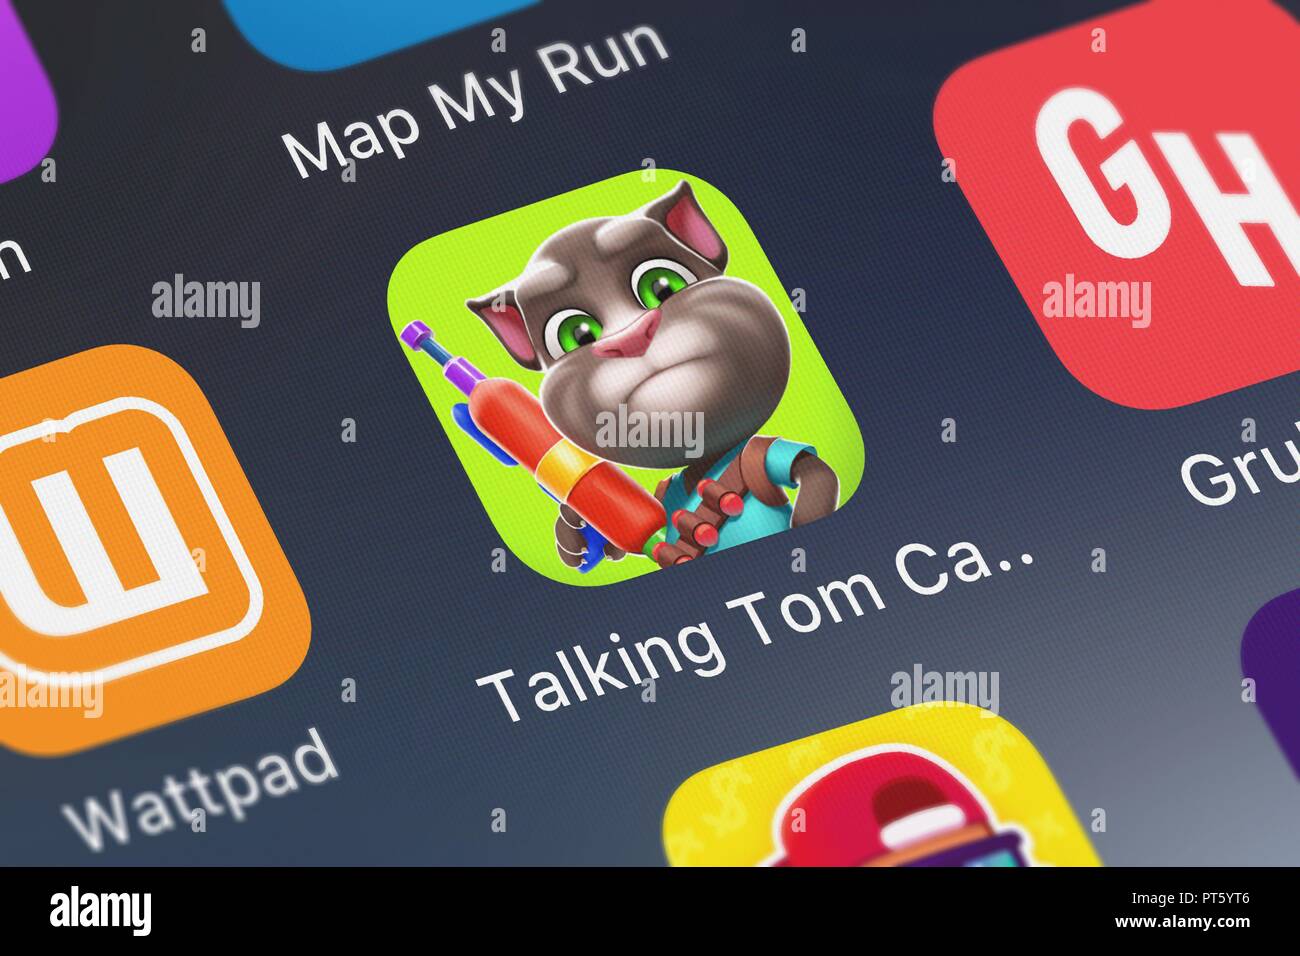 Download Talking Tom Camp